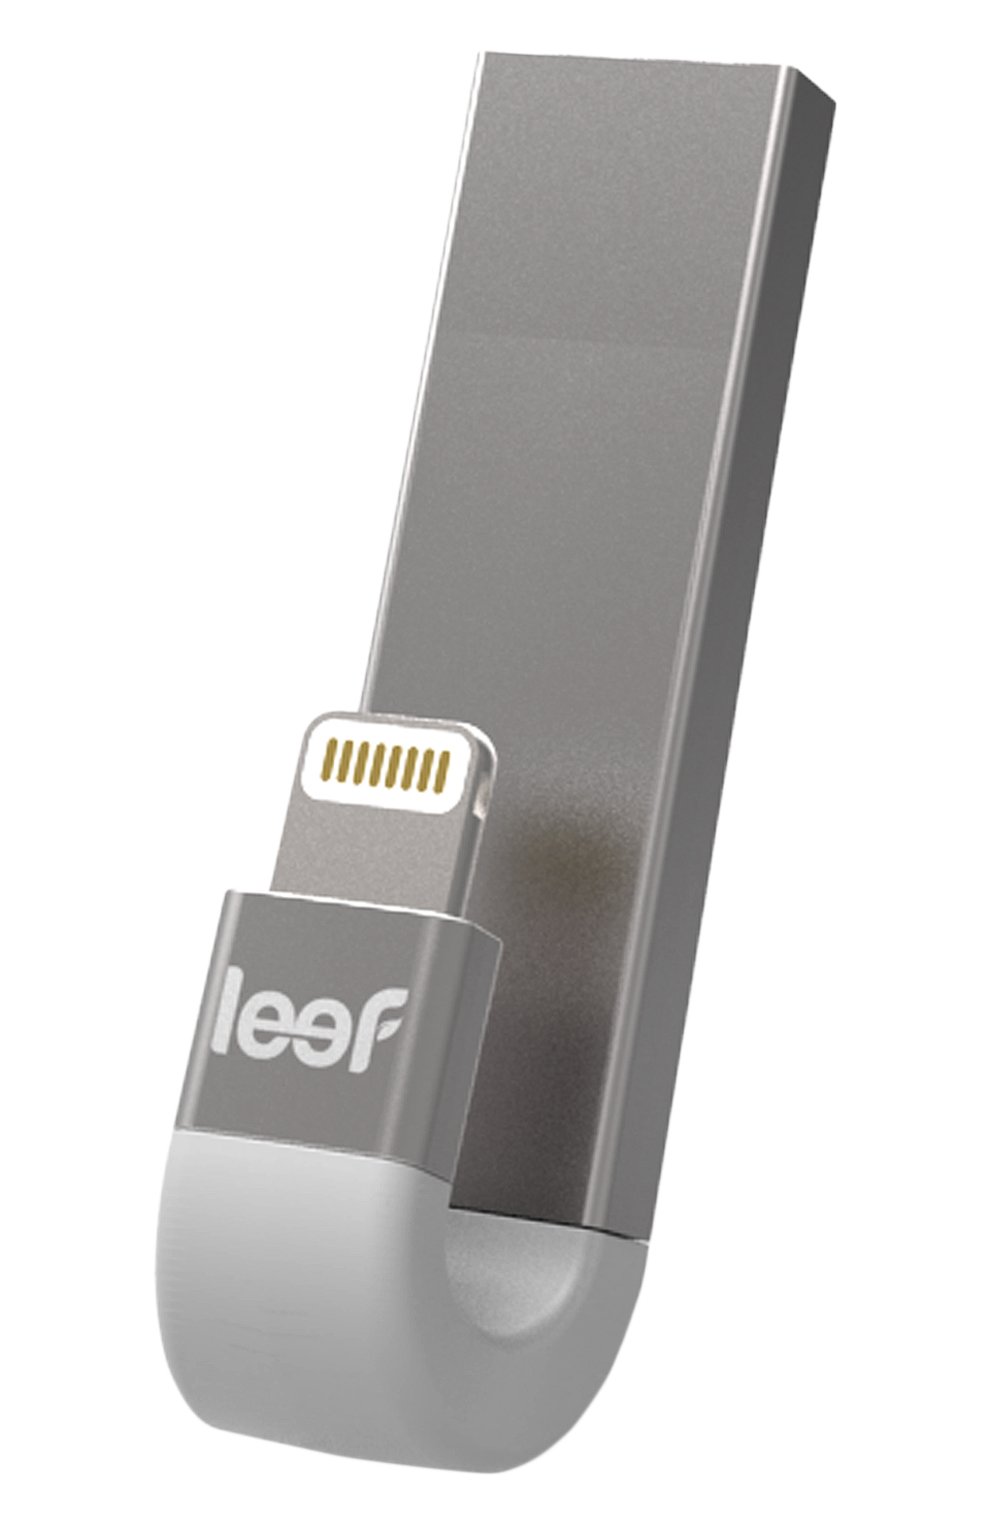 Iphone флеш. Флешка Leef IBRIDGE 128 ГБ. USB флешка Leef IBRIDGE 3 64gb. Флешка Leef Bridge 64 ГБ. Флешка для айфона 64 ГБ Leef.